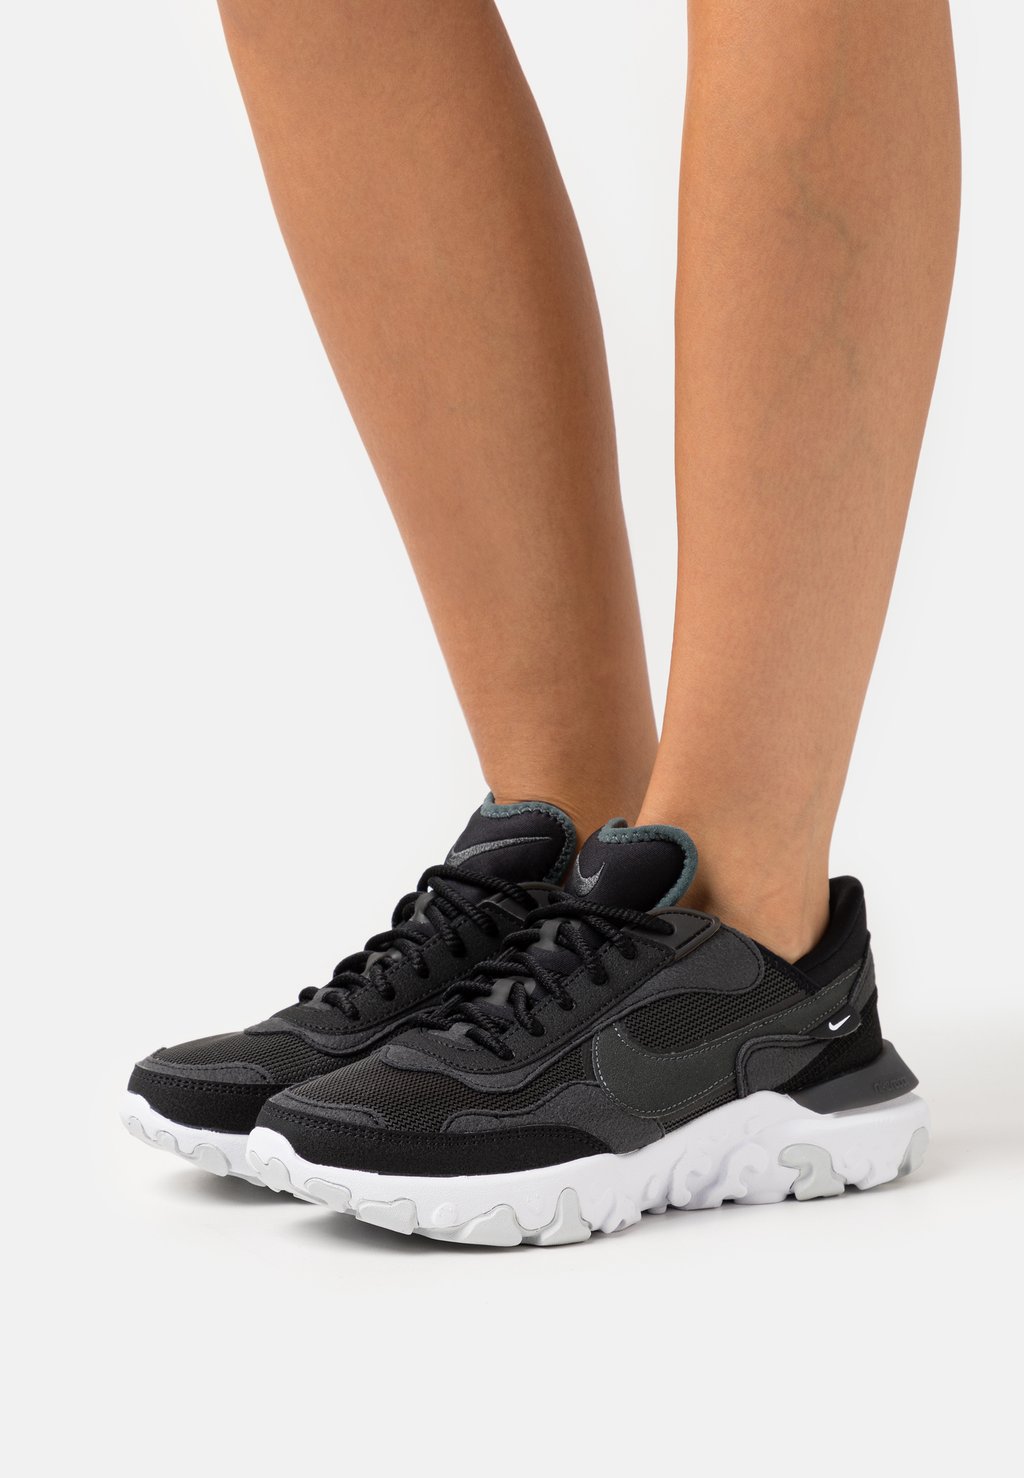 Кроссовки Nike React R3Vision, черный / антрацитовый